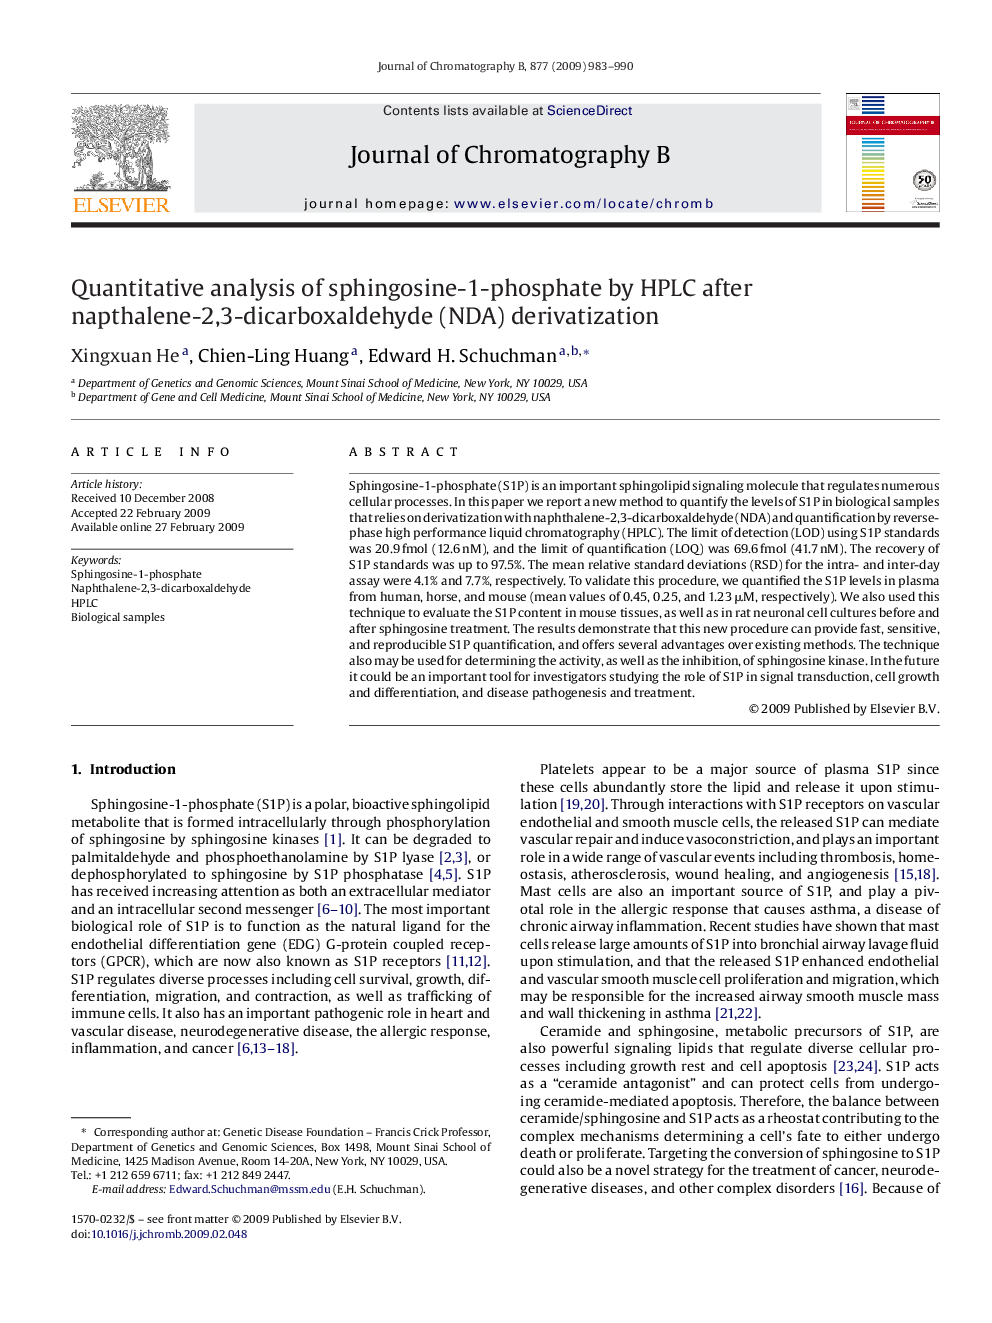 Quantitative analysis of sphingosine-1-phosphate by HPLC after napthalene-2,3-dicarboxaldehyde (NDA) derivatization